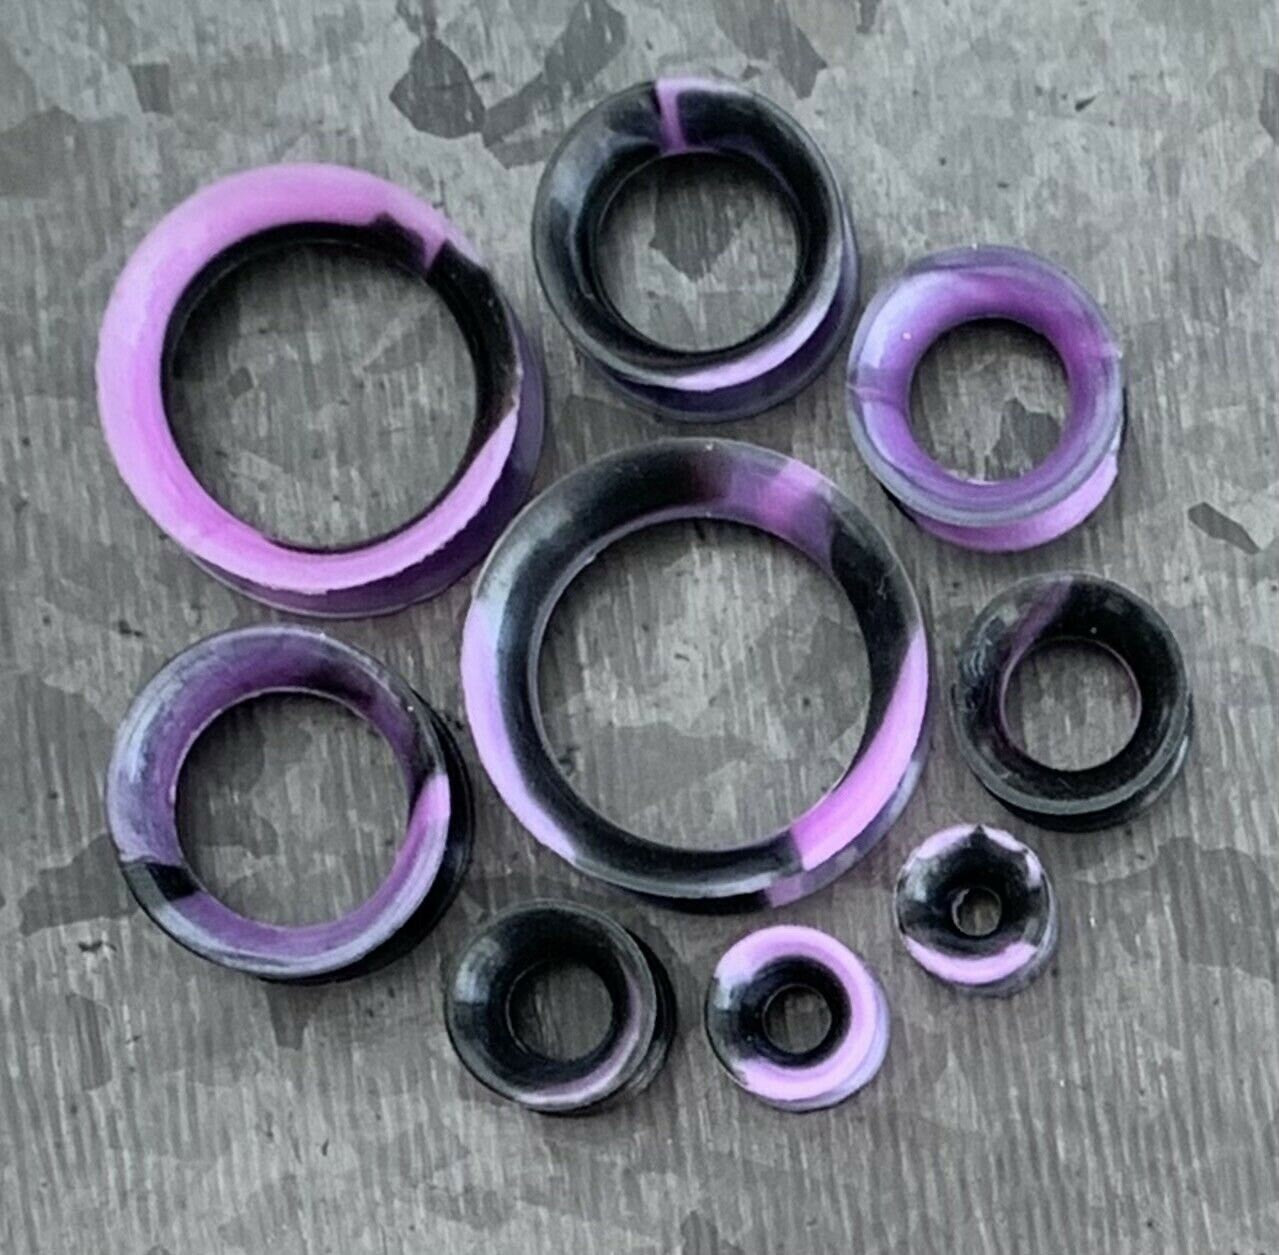 PAIR Stunning Black & Purple Swirl Ultra Thin Double Flare Tunnels/Plugs - Gauges 4g (5mm) thru 7/8" (22mm) available!